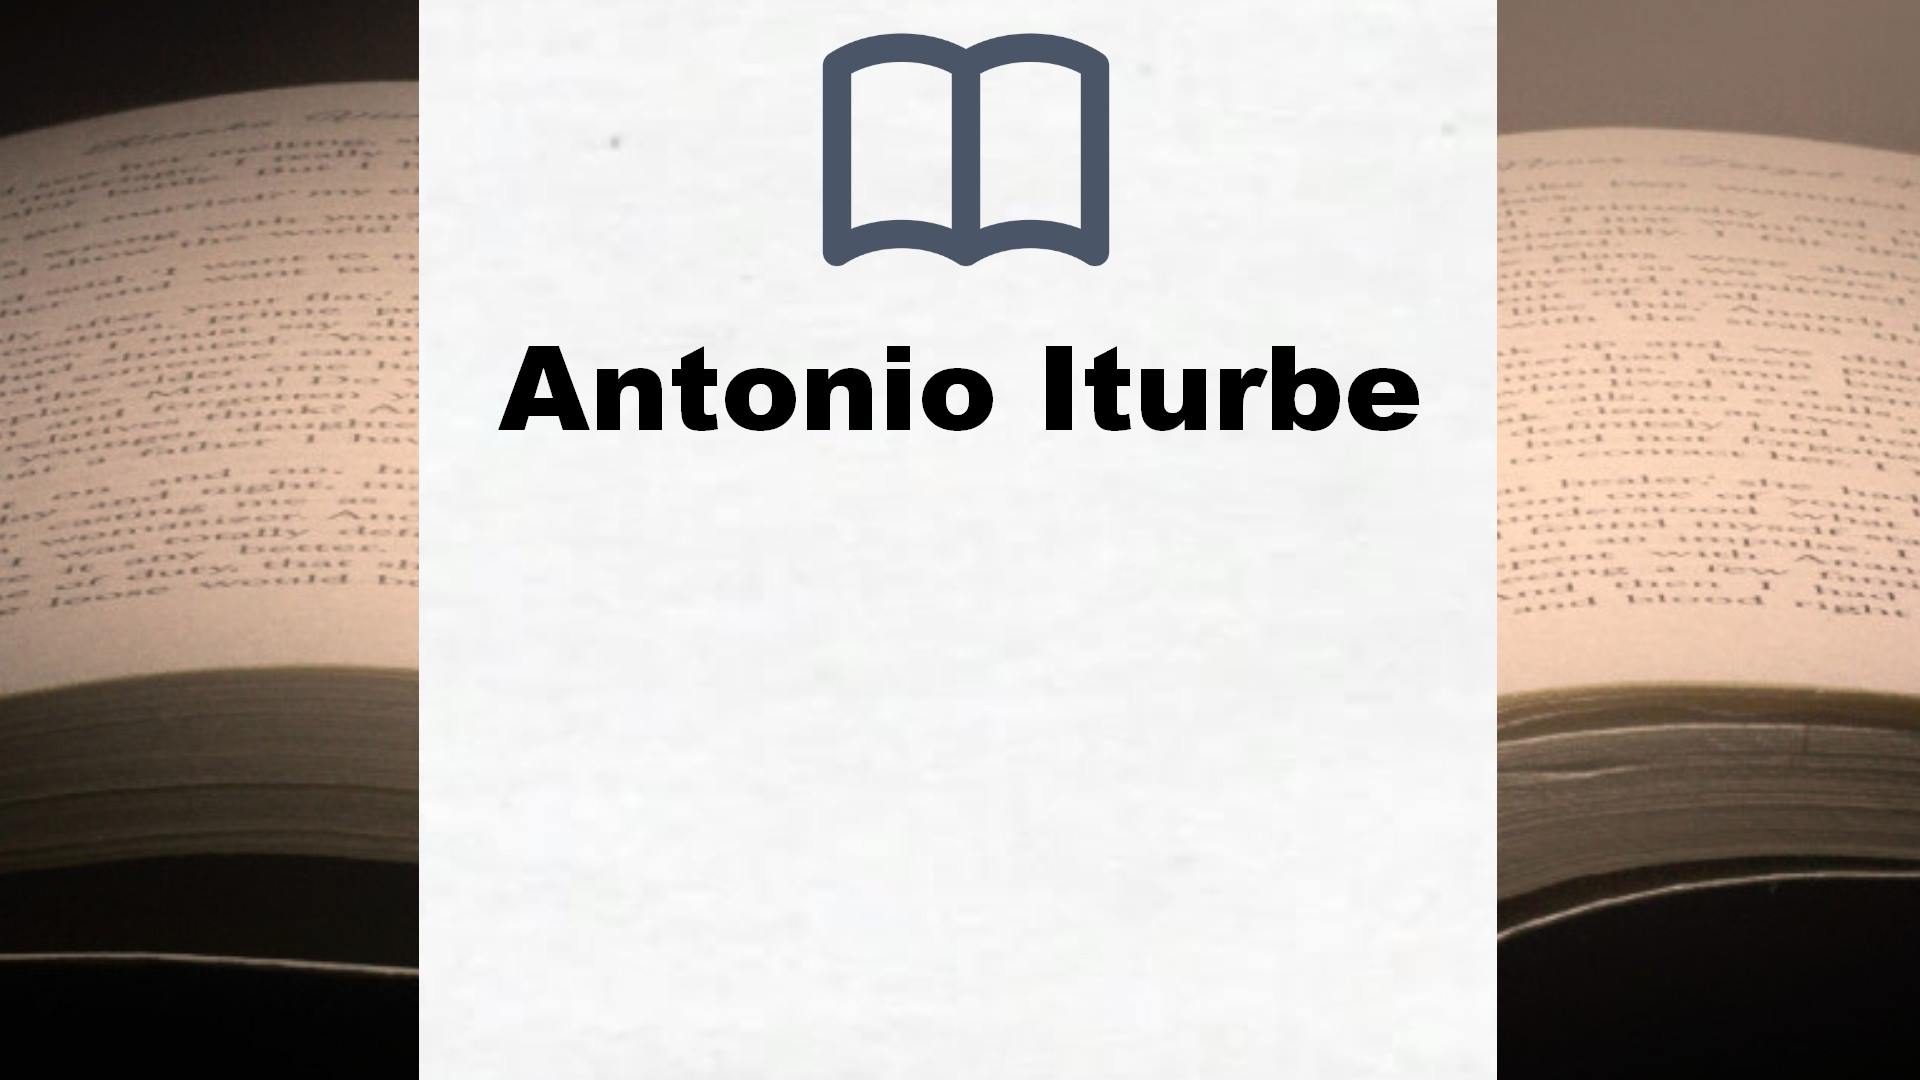 Libros Antonio Iturbe